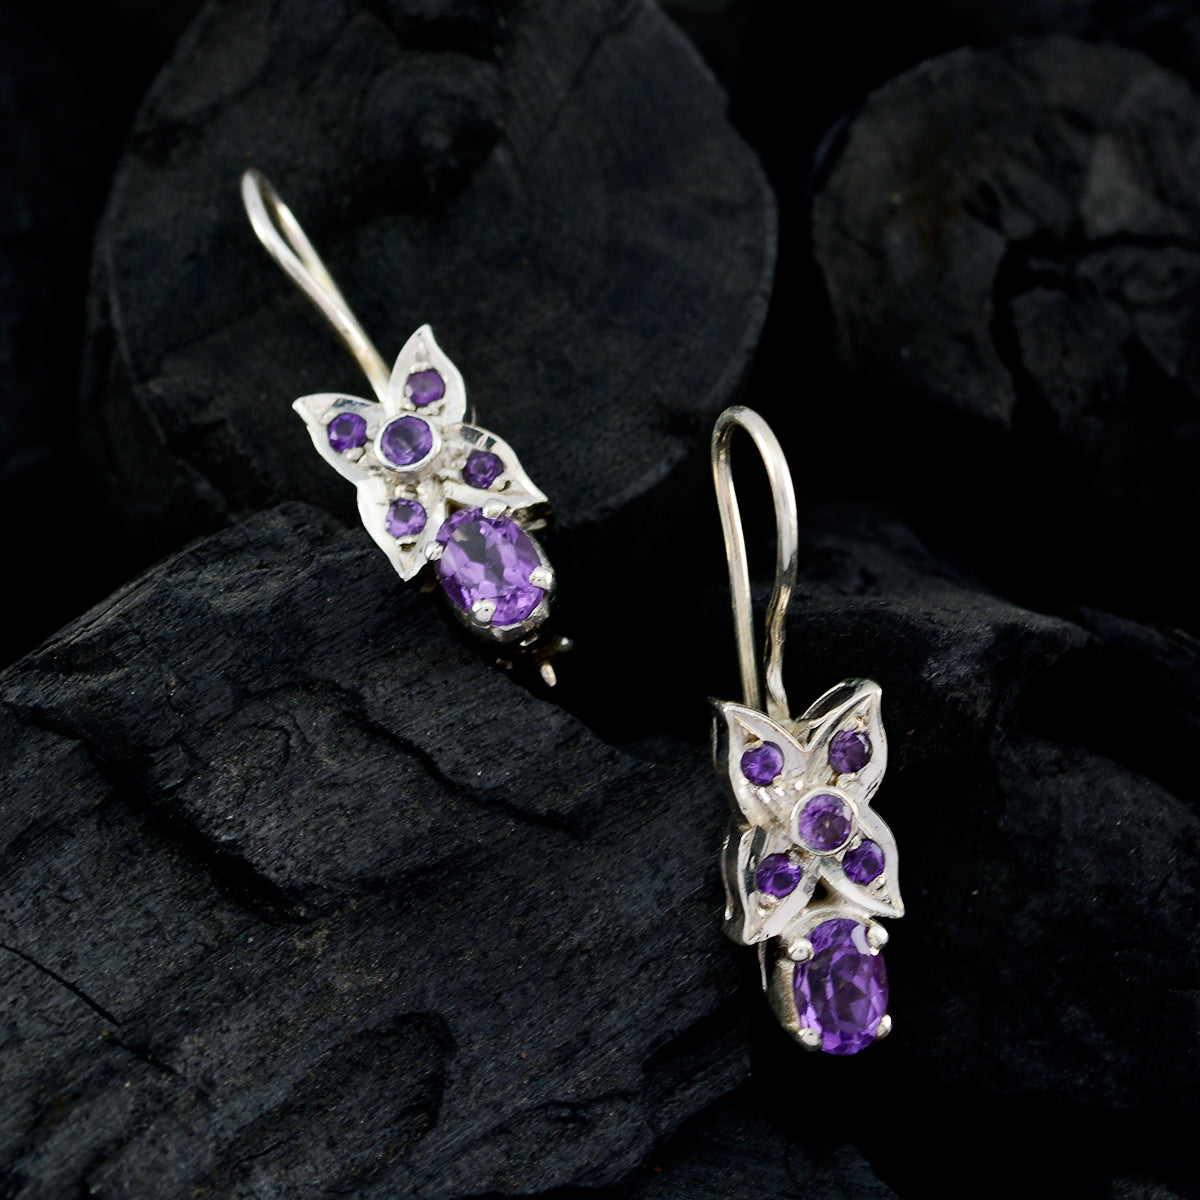 Riyo Good Gemstones multi shape Faceted Purple Amethyst Silver Earrings Faishonable day gift